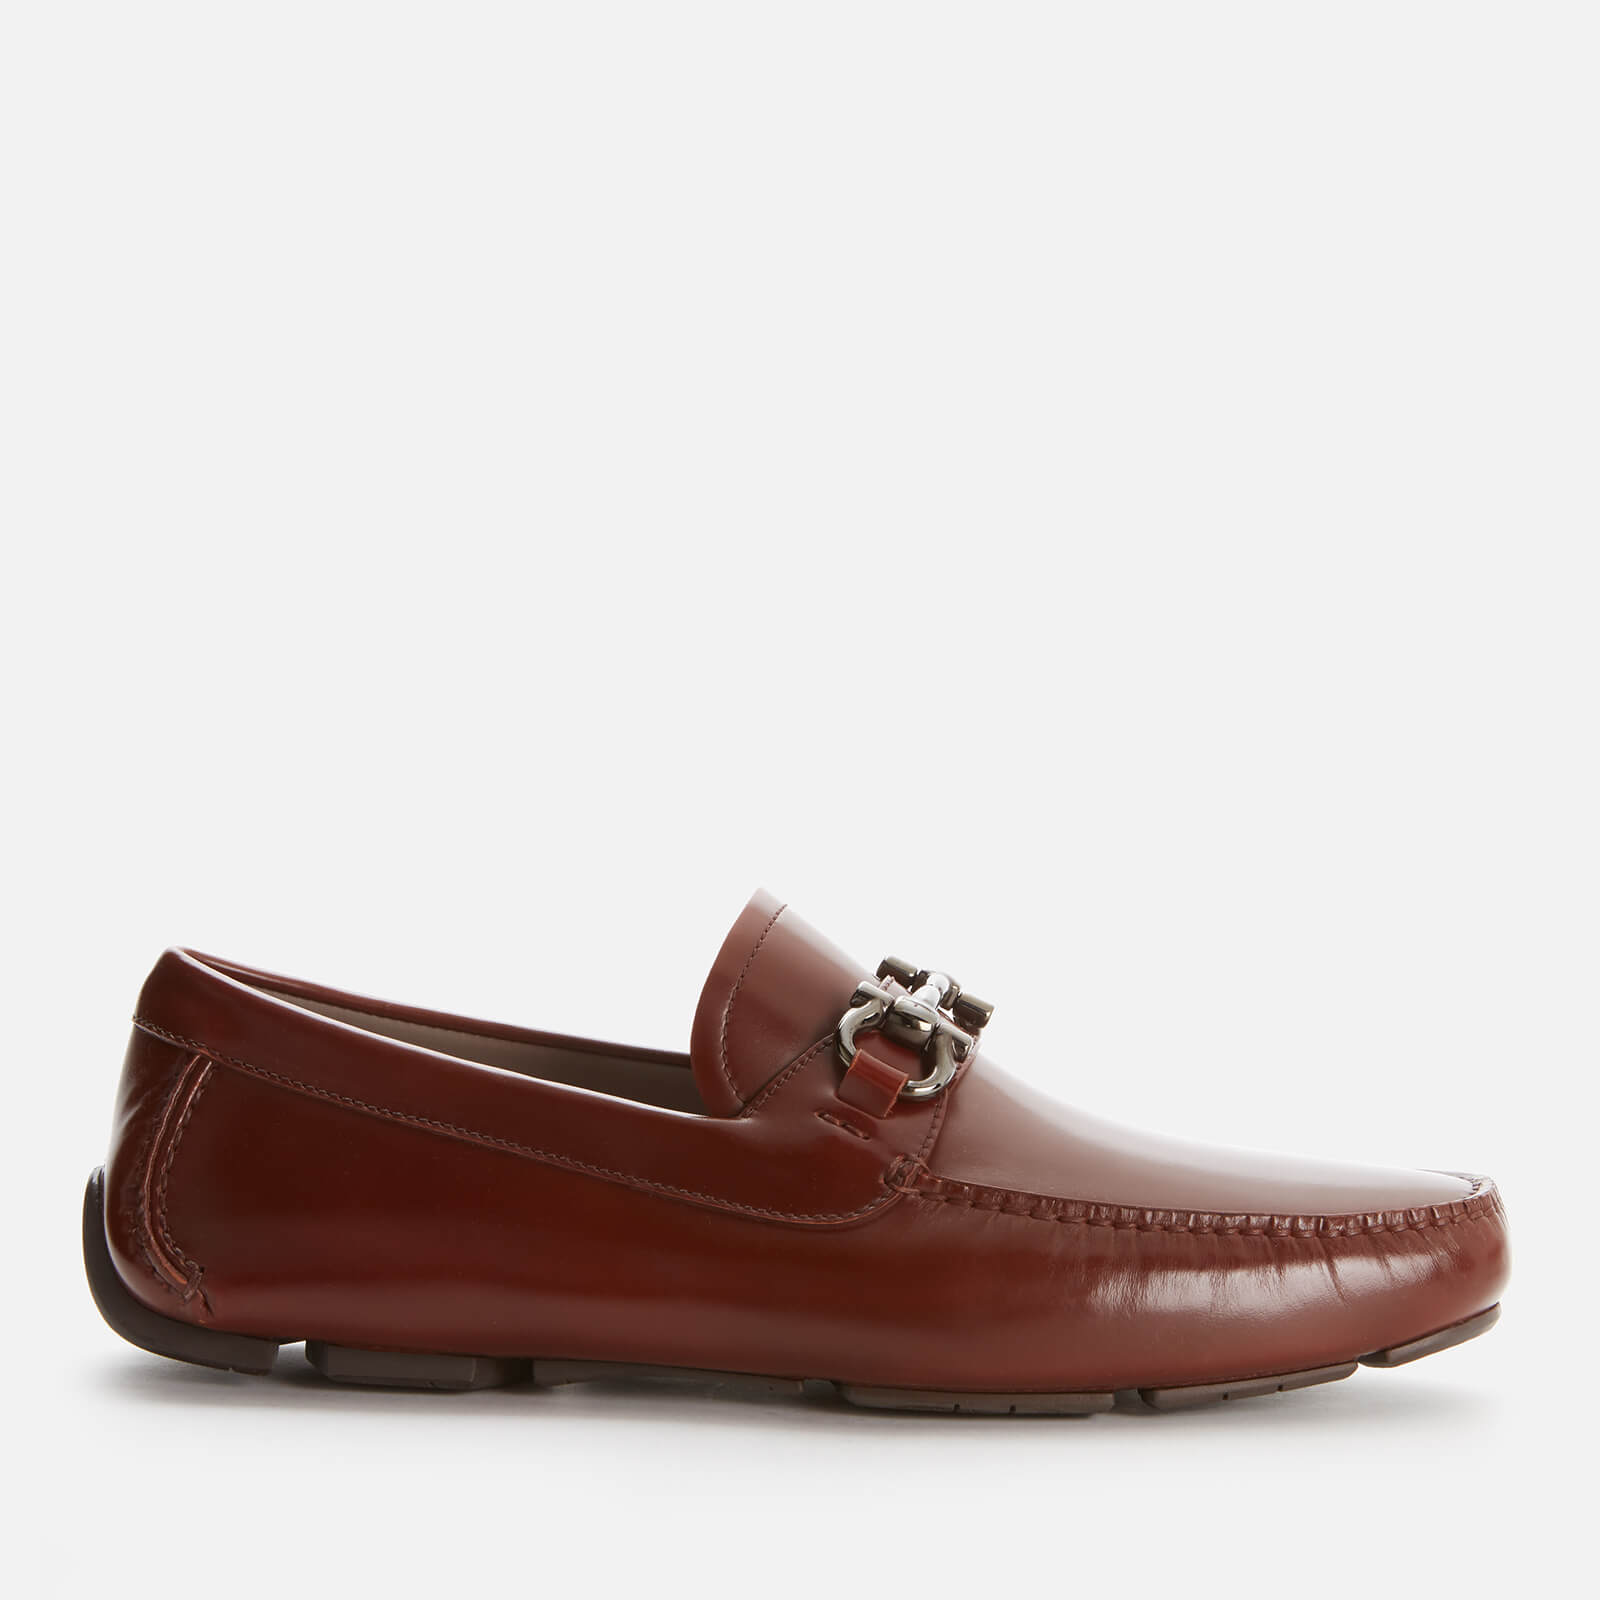 Salvatore Ferragamo Men's Parigi Leather Driving Shoes - Brown - UK 6